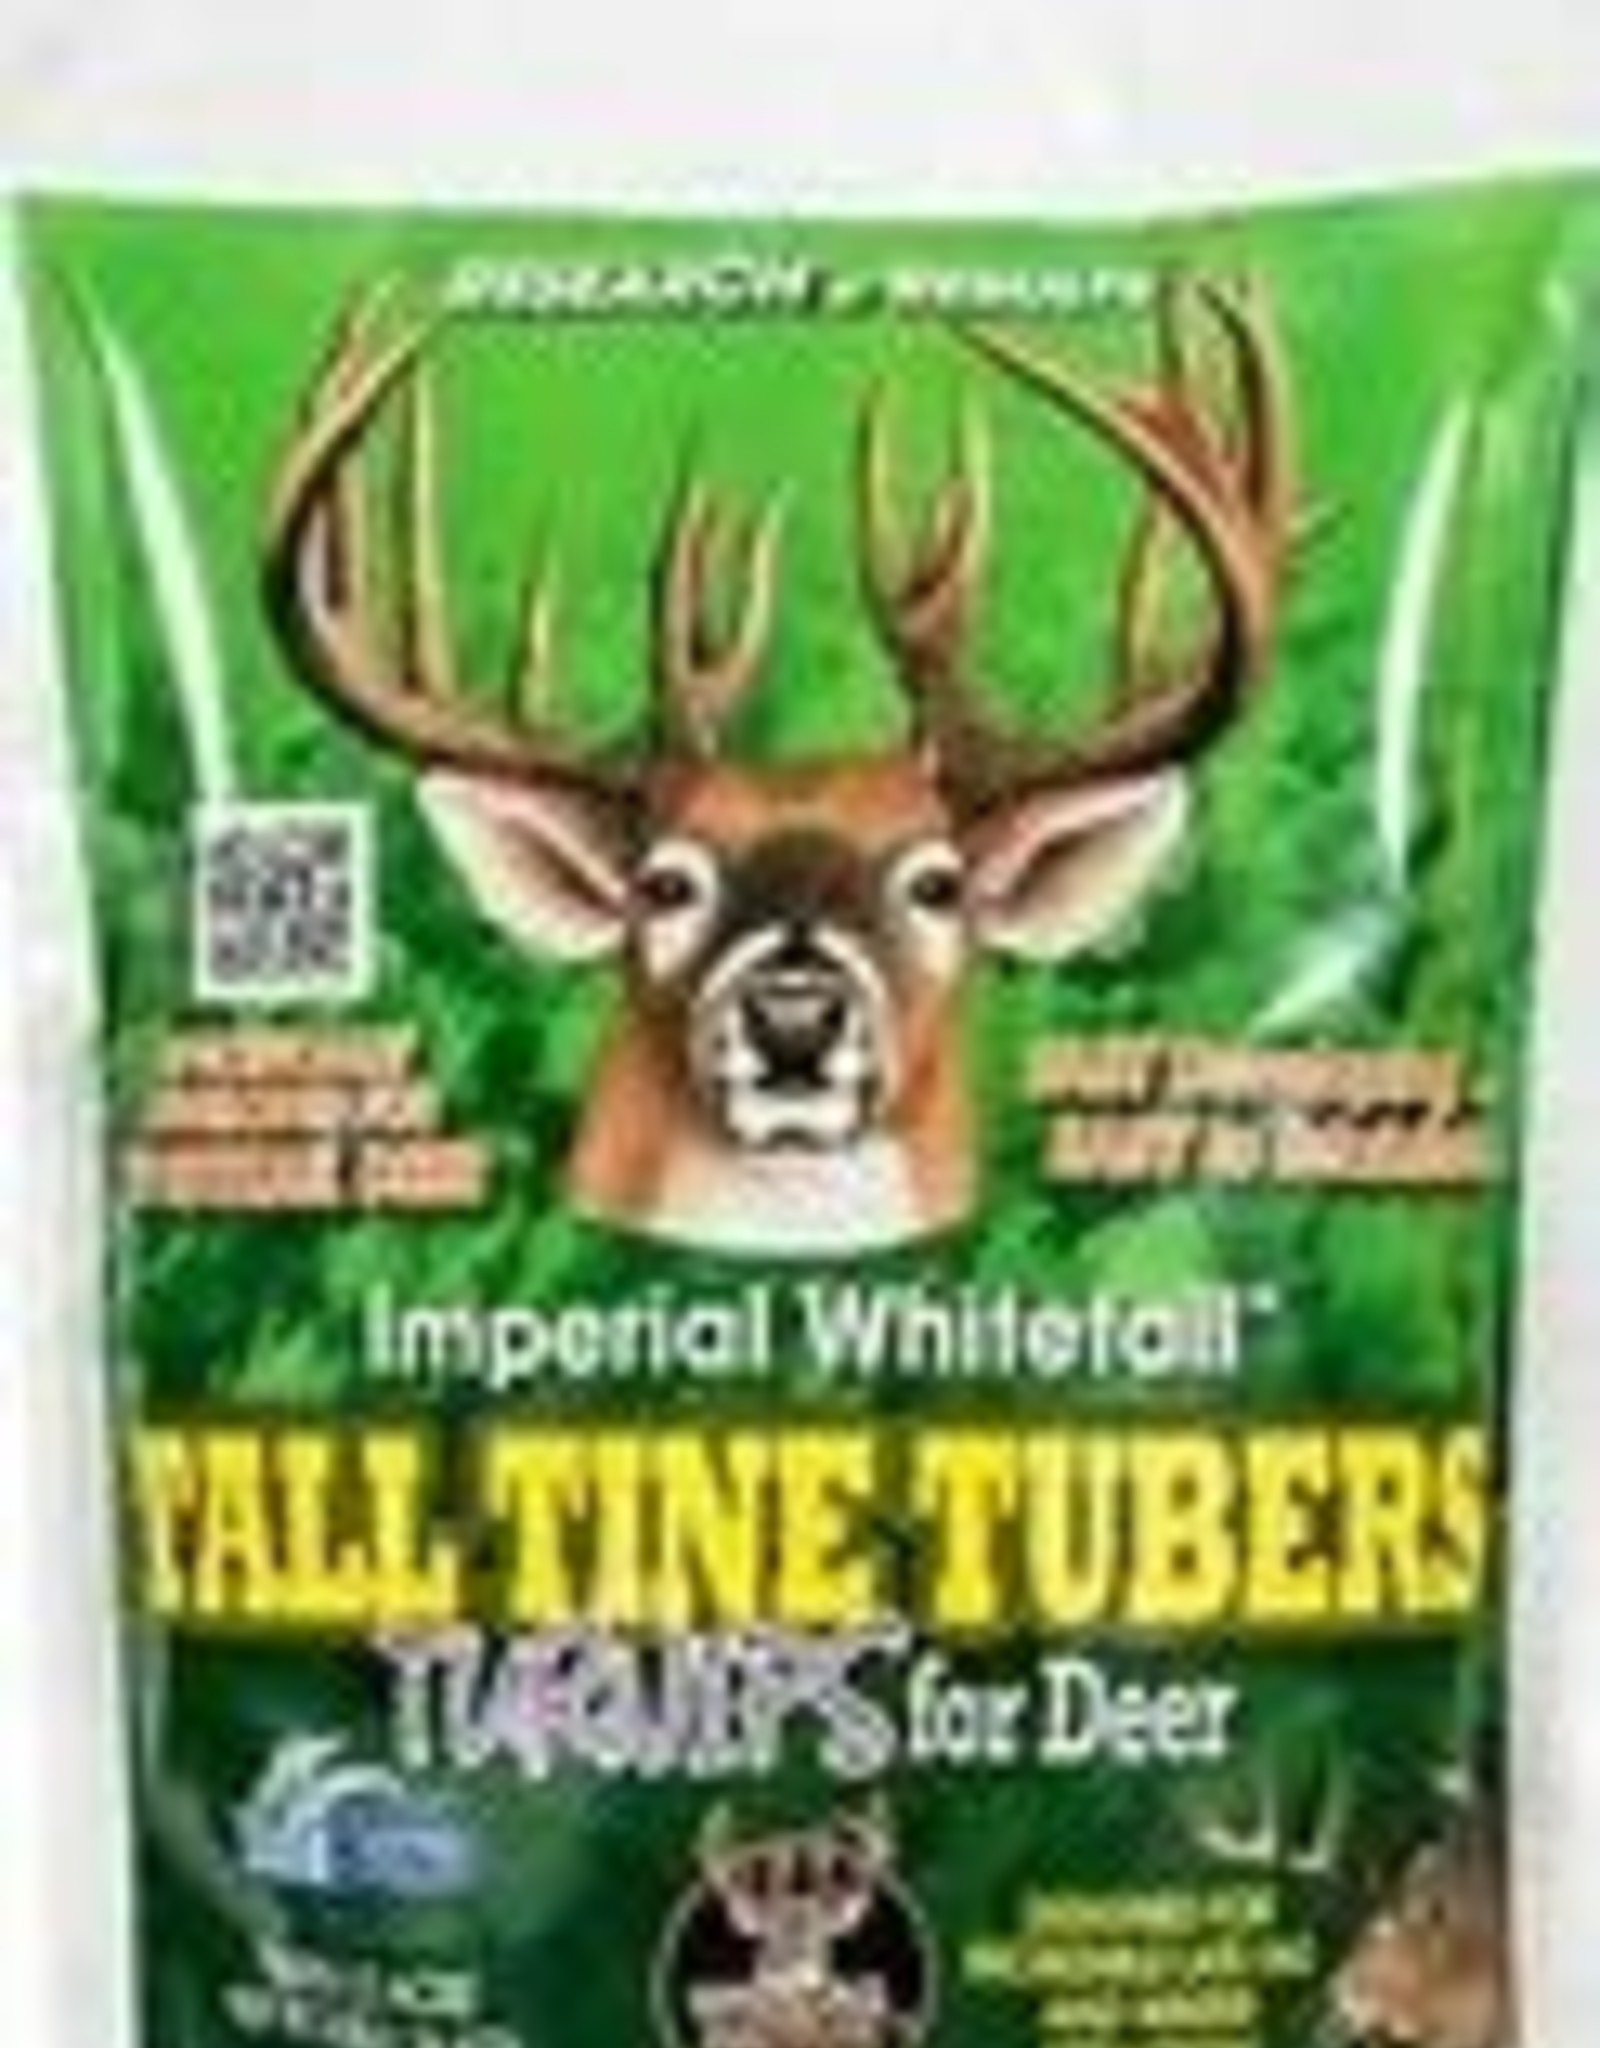 Whitetail Institute Tall Tine Tubers Turnips